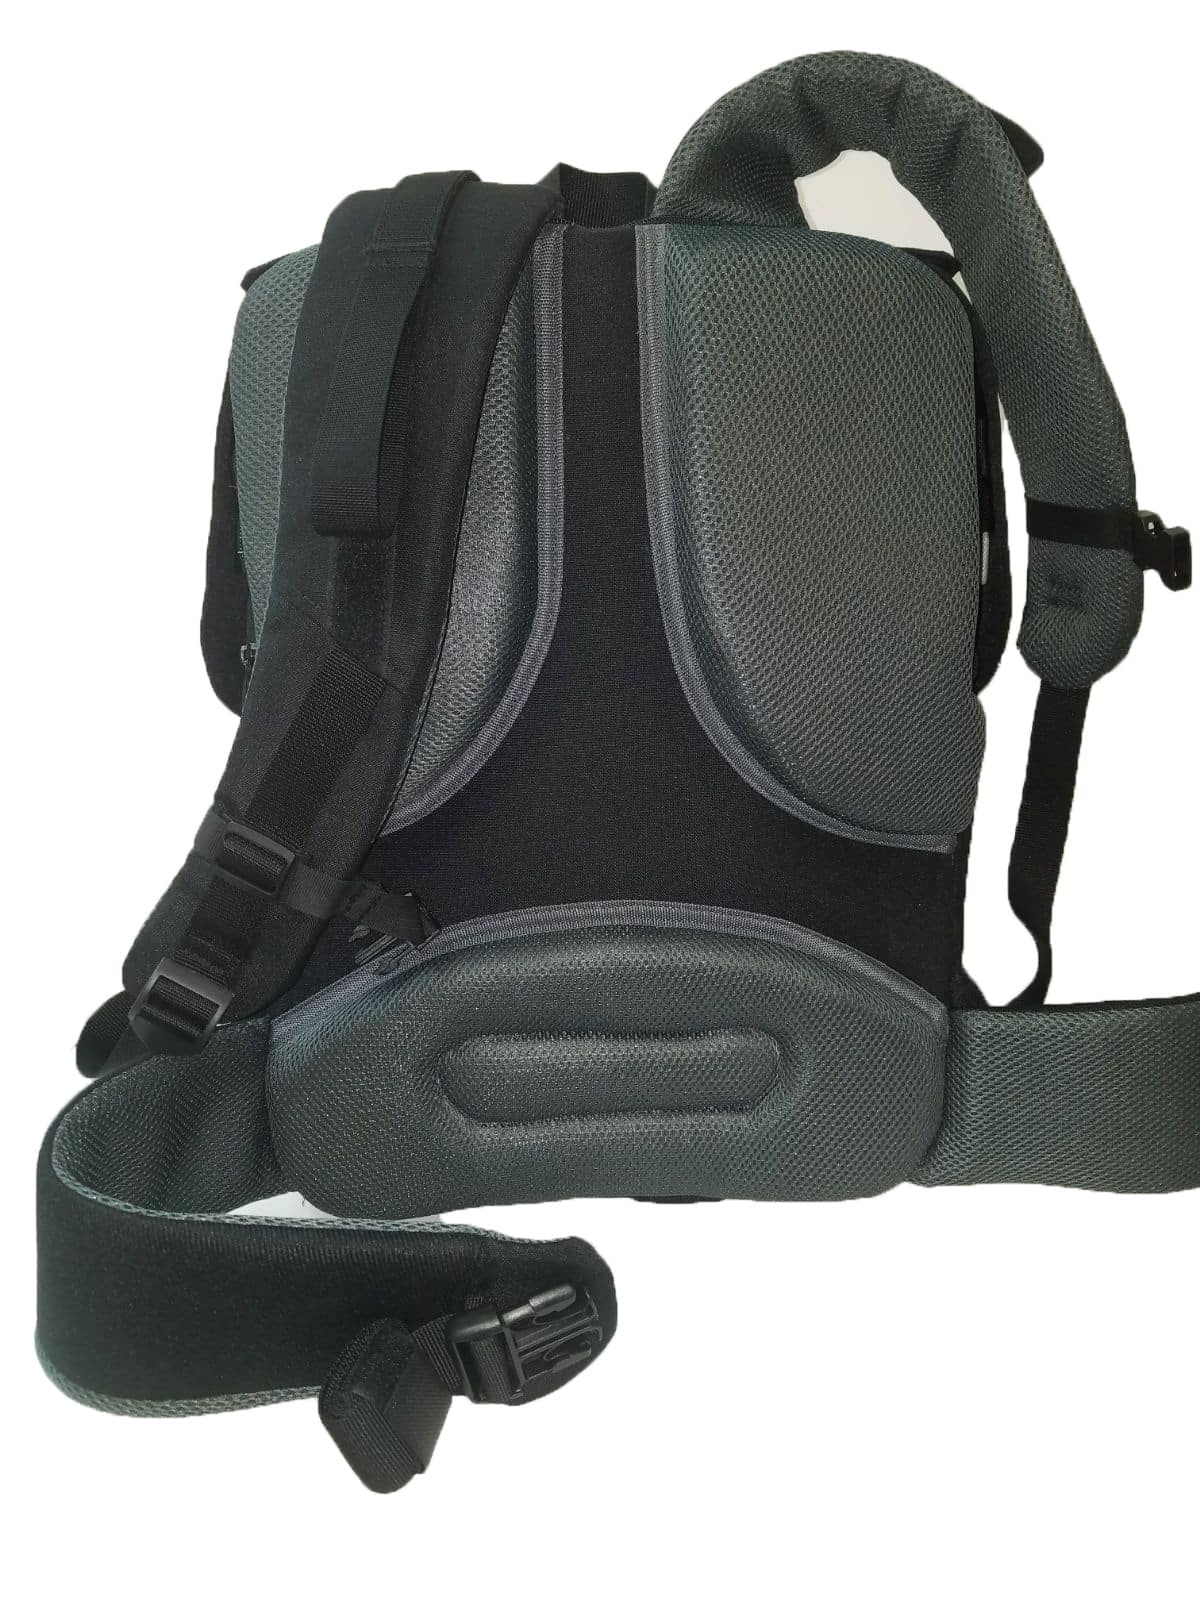 Bulletproof Backpack Full Body Armor Details